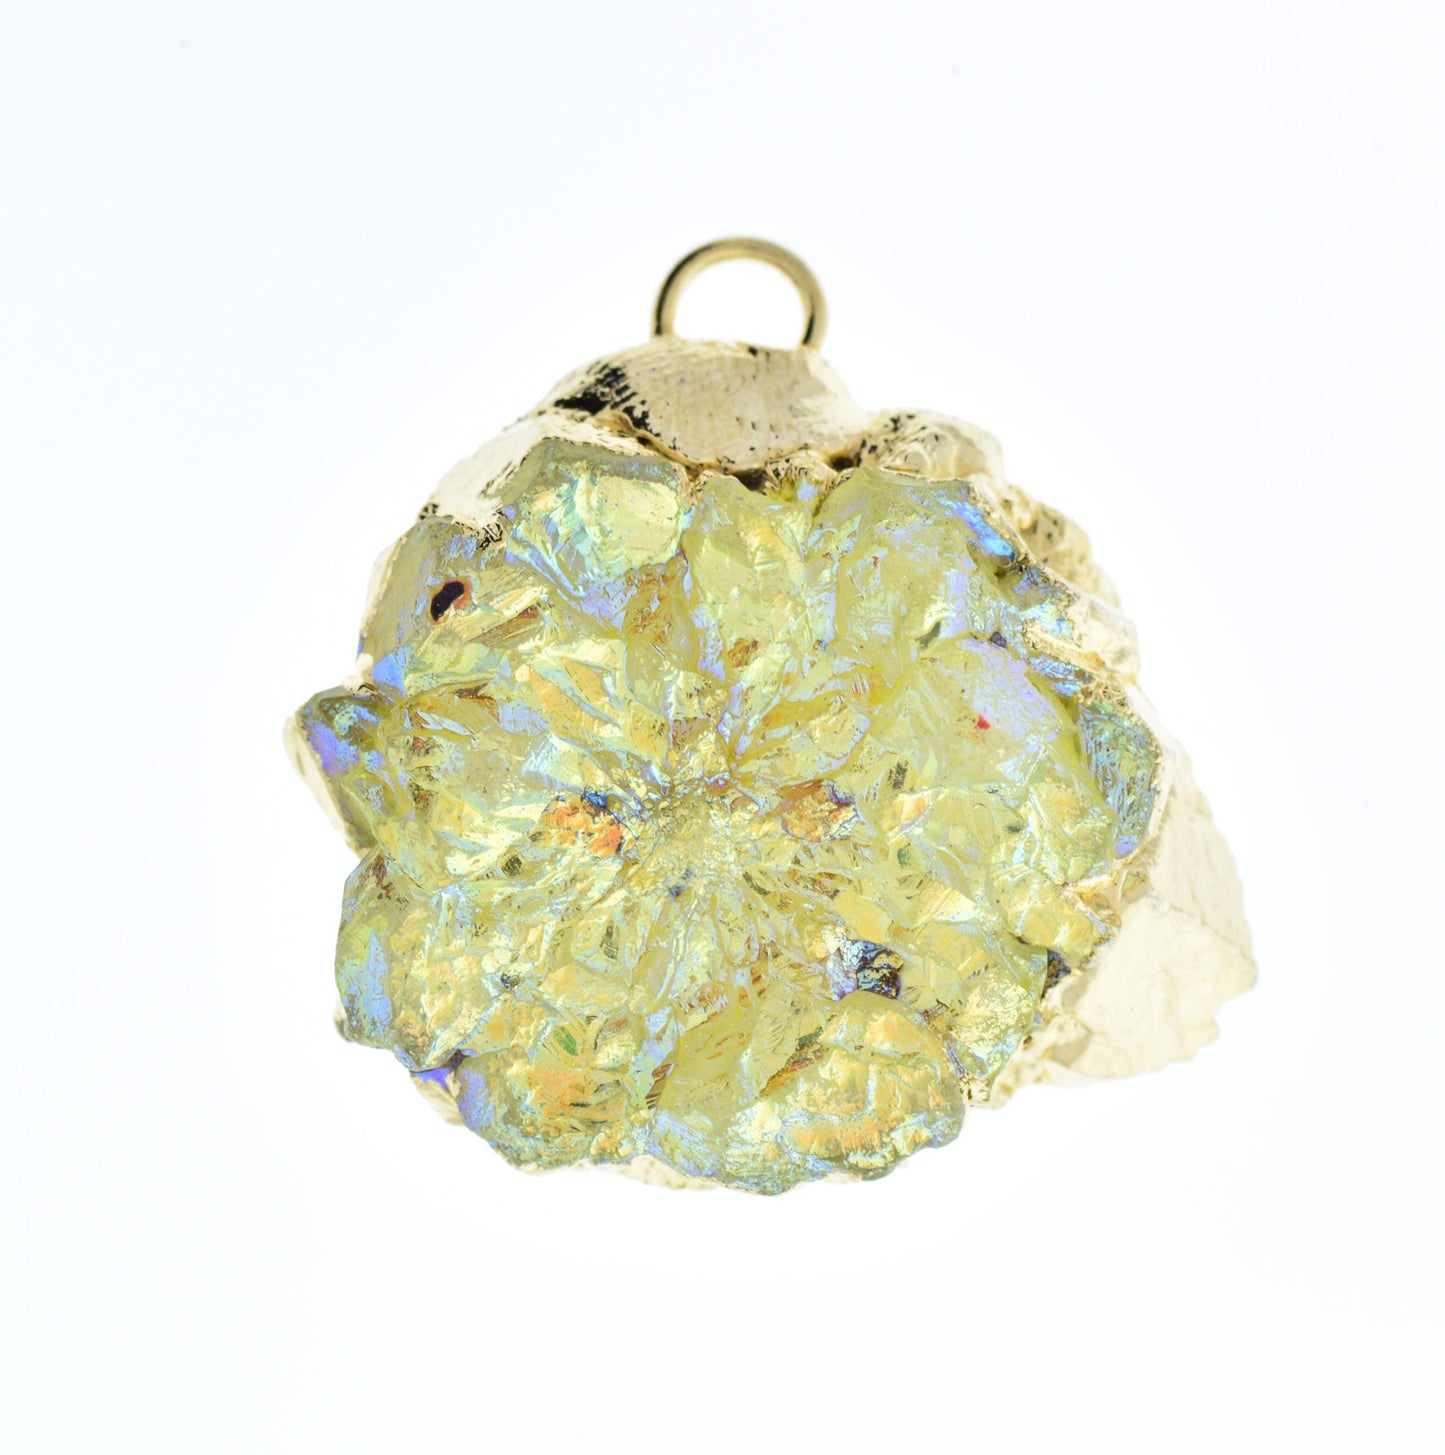 Agate pendant gold leaf borders, purple, varied sizes shapes, each